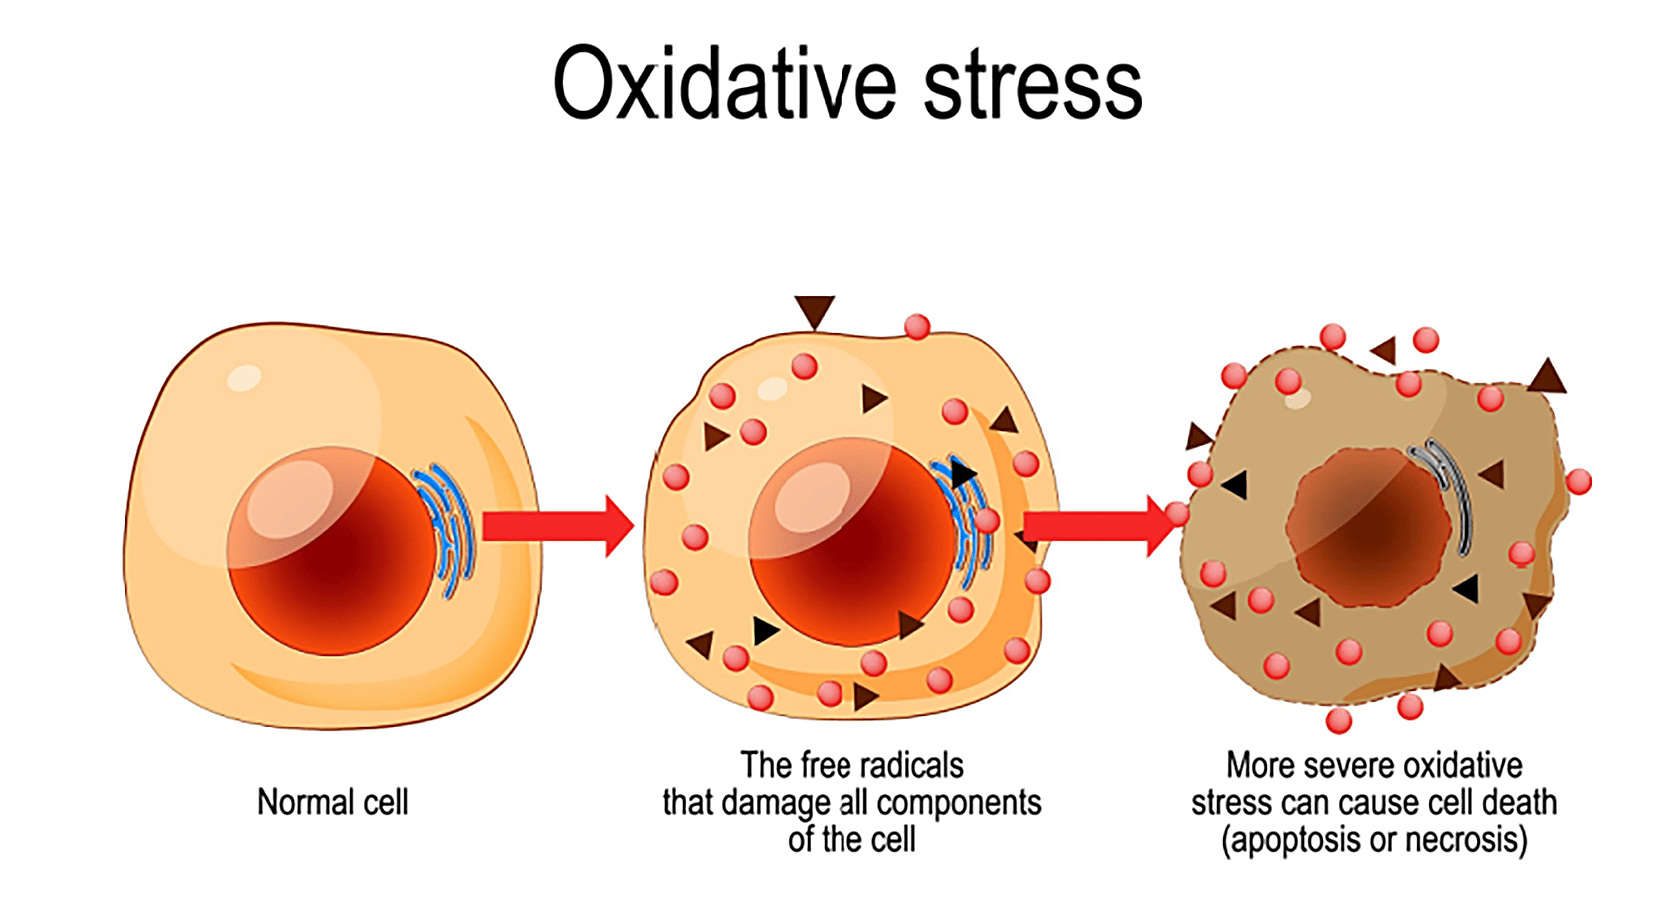 Oxidative stress